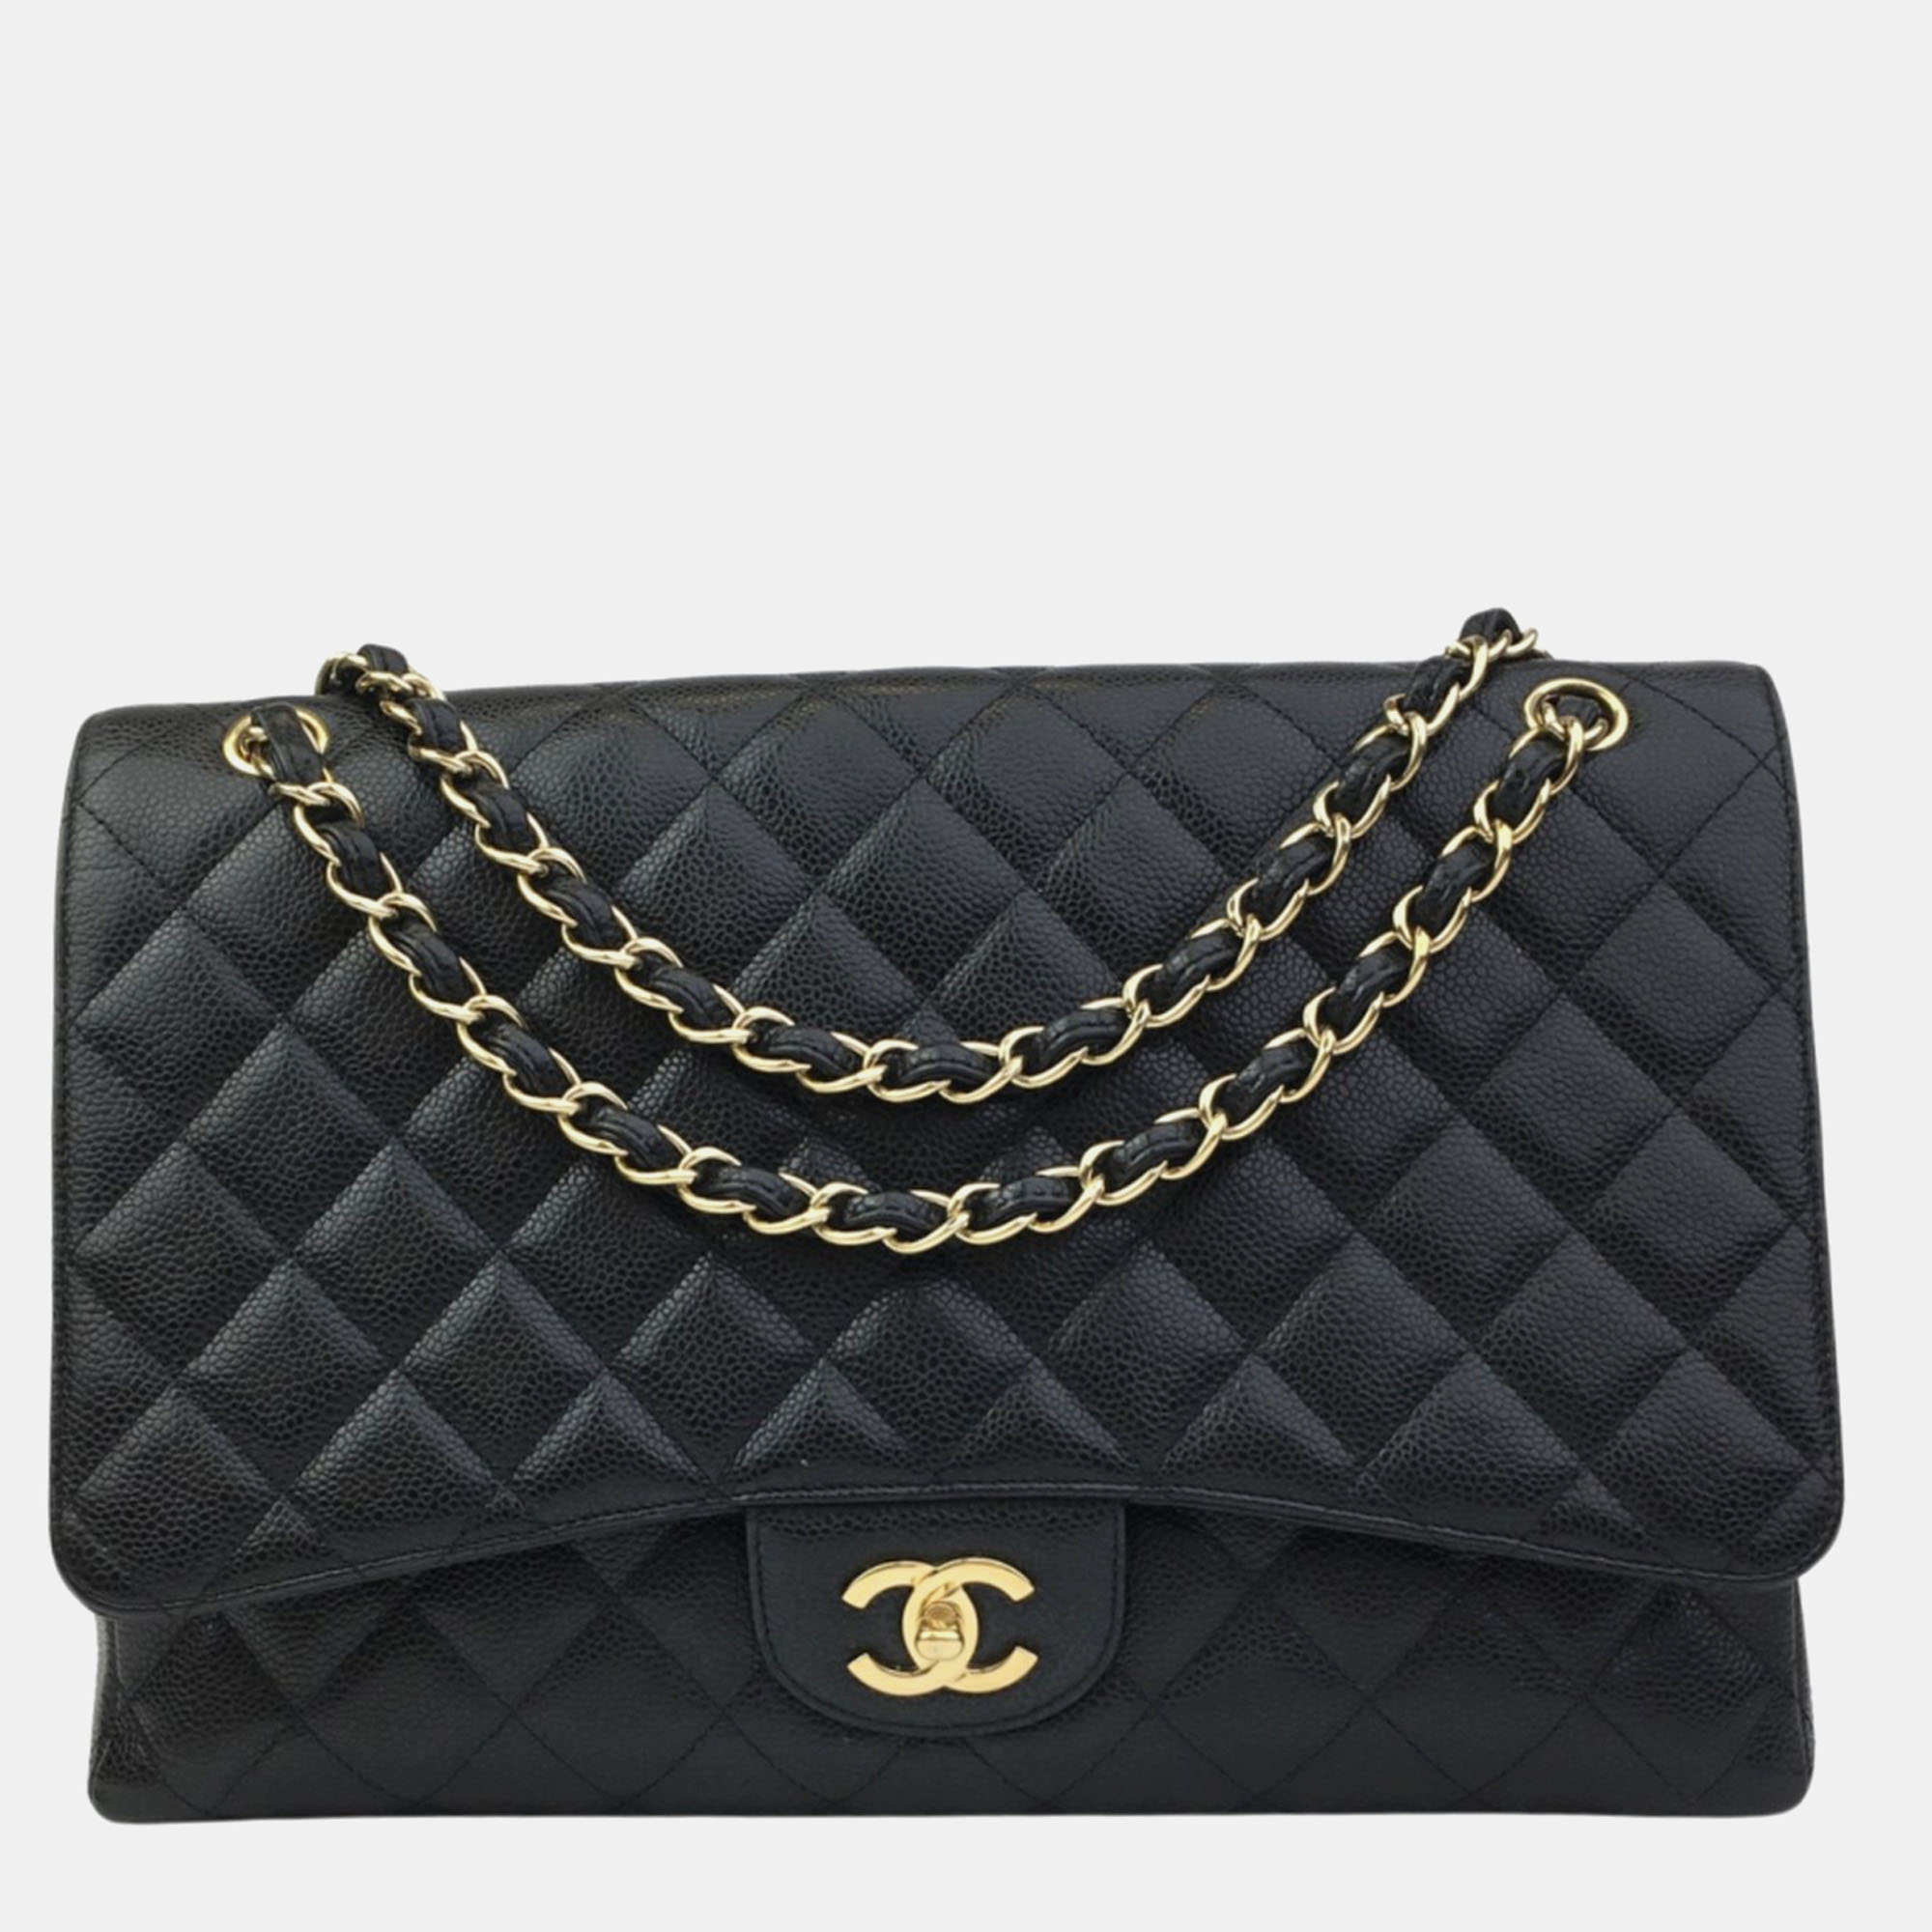 Chanel black leather xl classic single flap shoulder bag